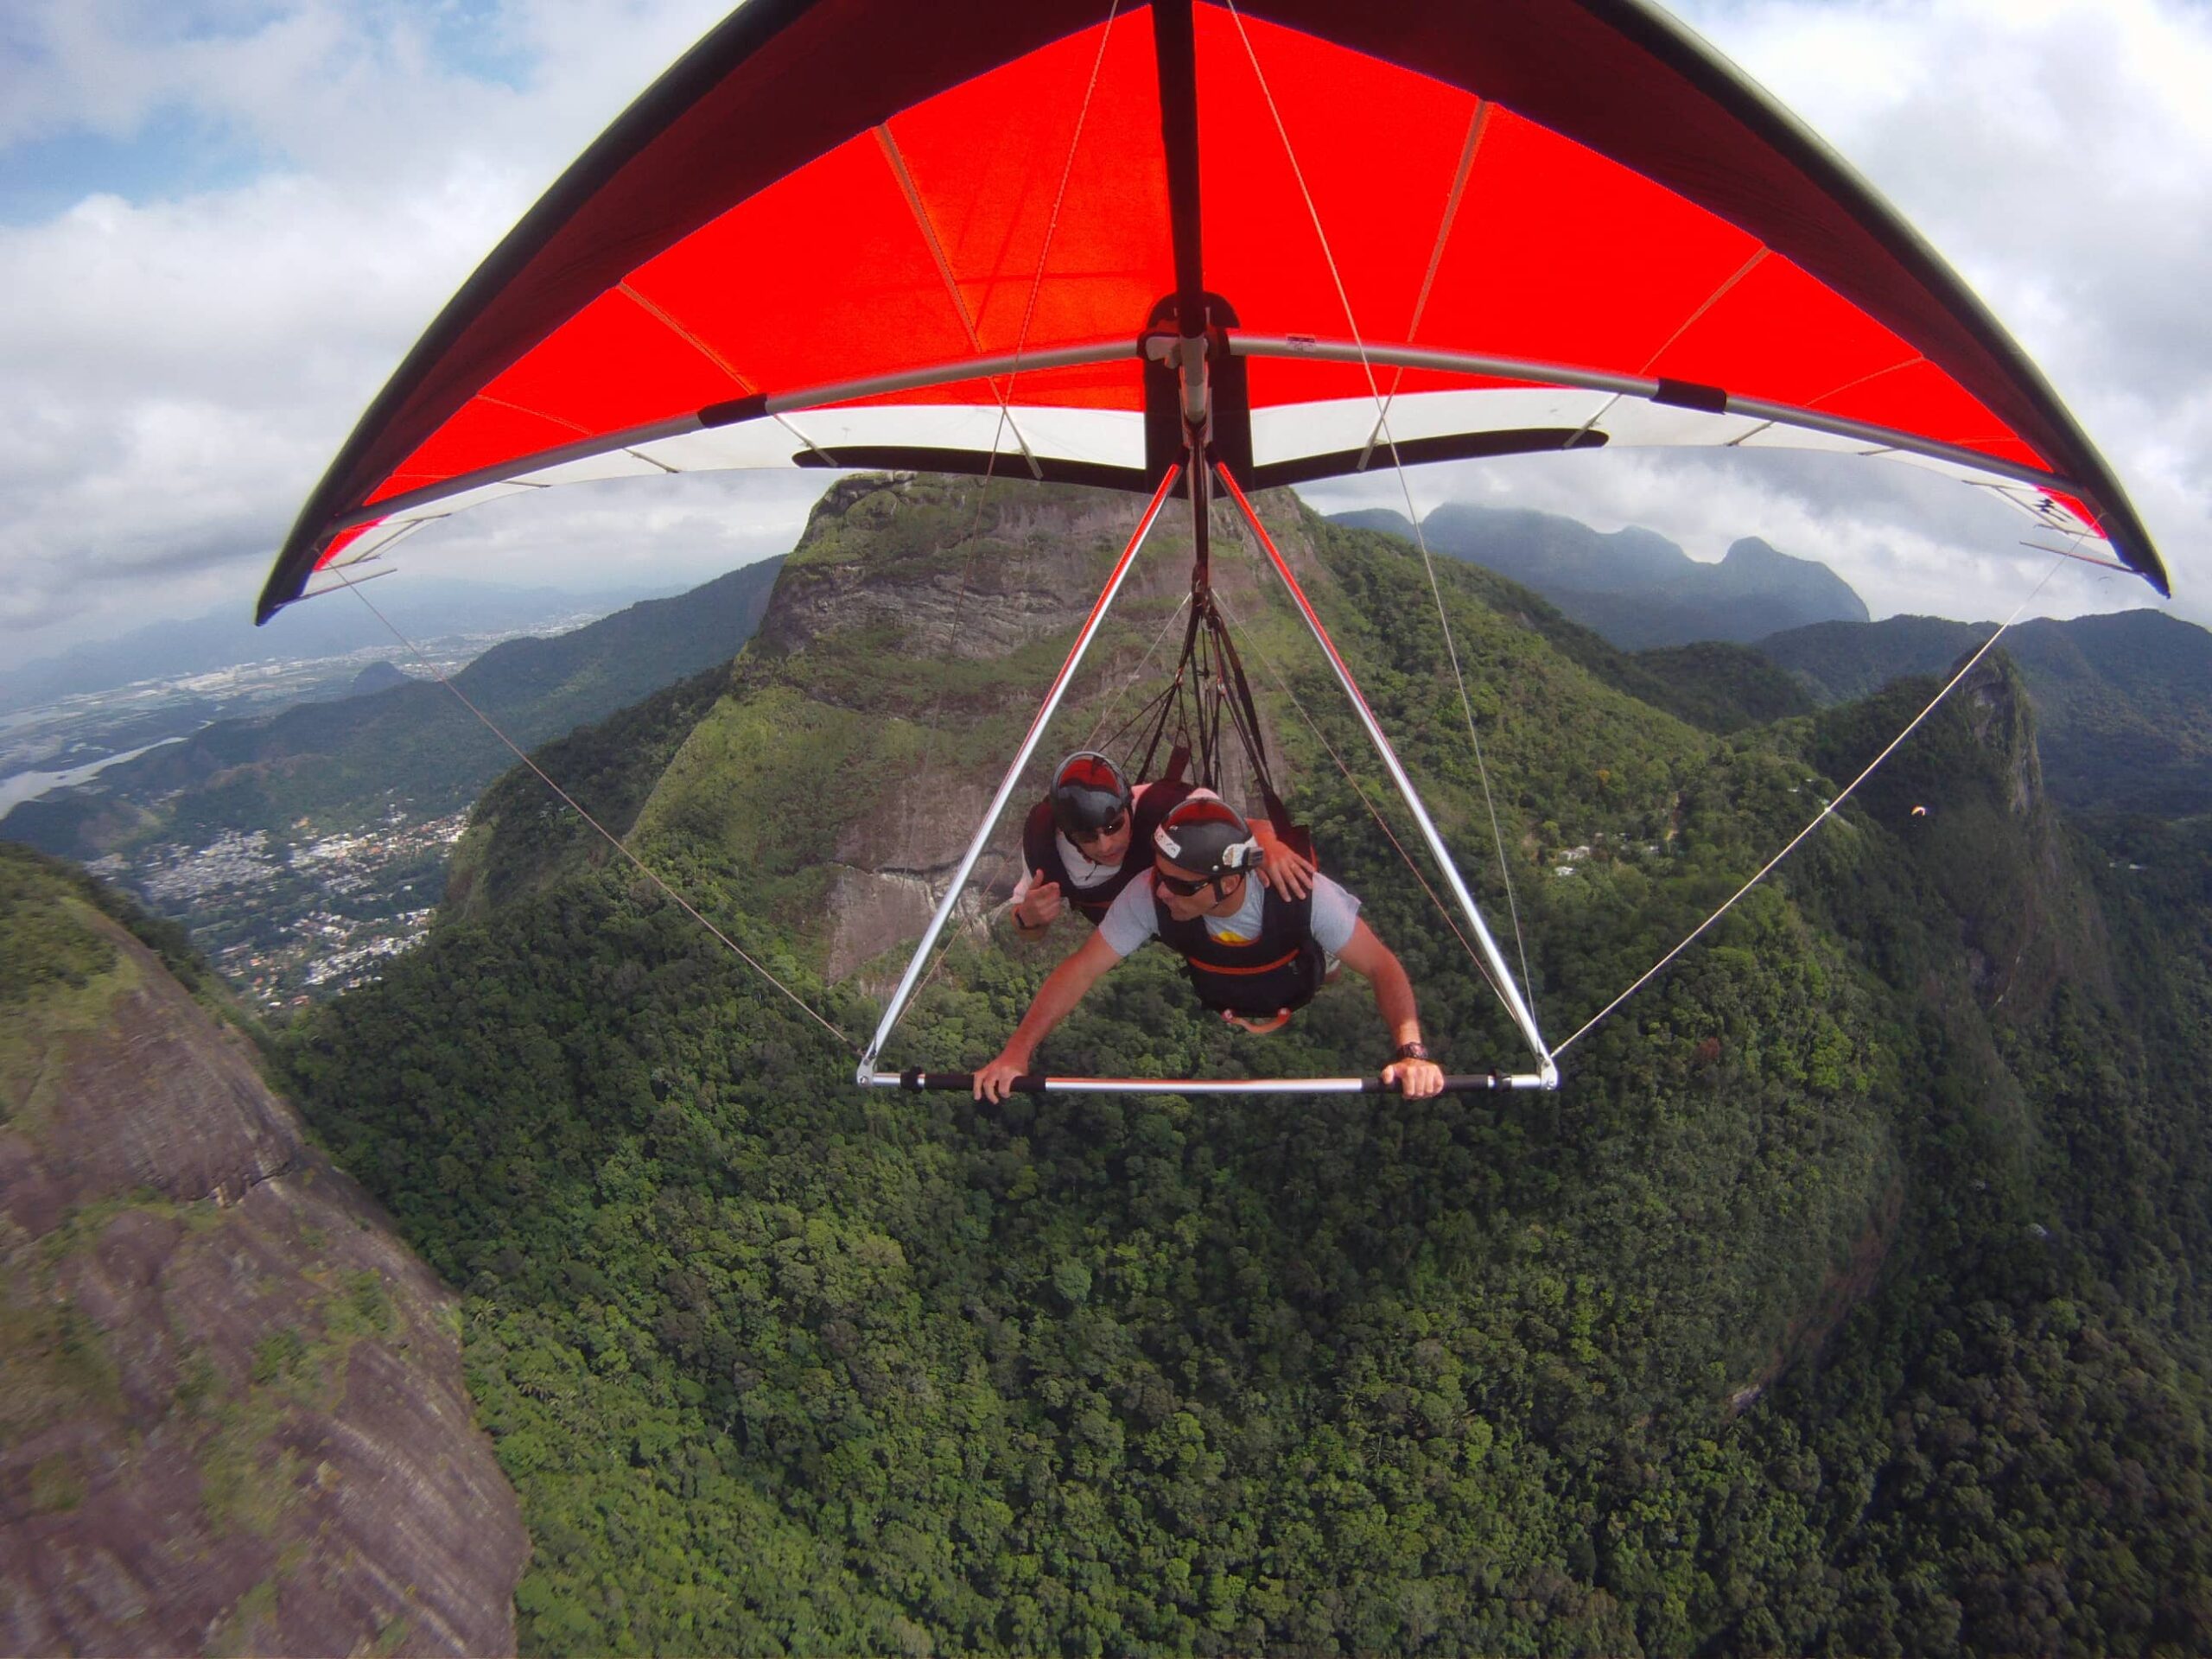 Hang_Gliding_high_above_Tijuca_National_Park_Rio_de_Janeiro-scaled.jpg